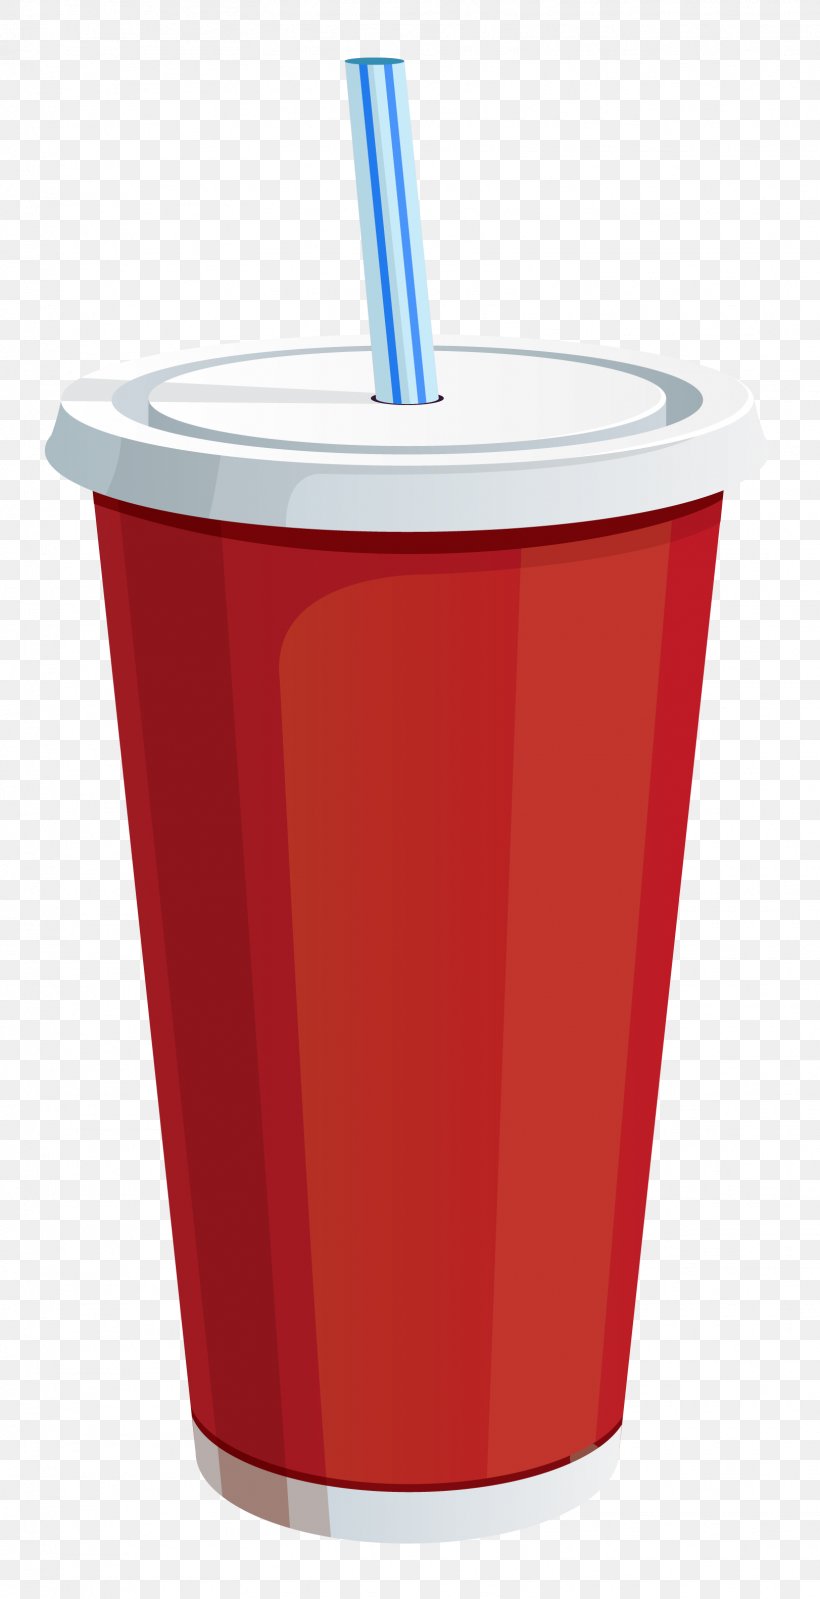 Soft Drink Coca-Cola Diet Drink Cup Clip Art, PNG, 1623x3166px, Soft Drink, Cocacola, Coffee Cup, Cup, Cup Drink Download Free